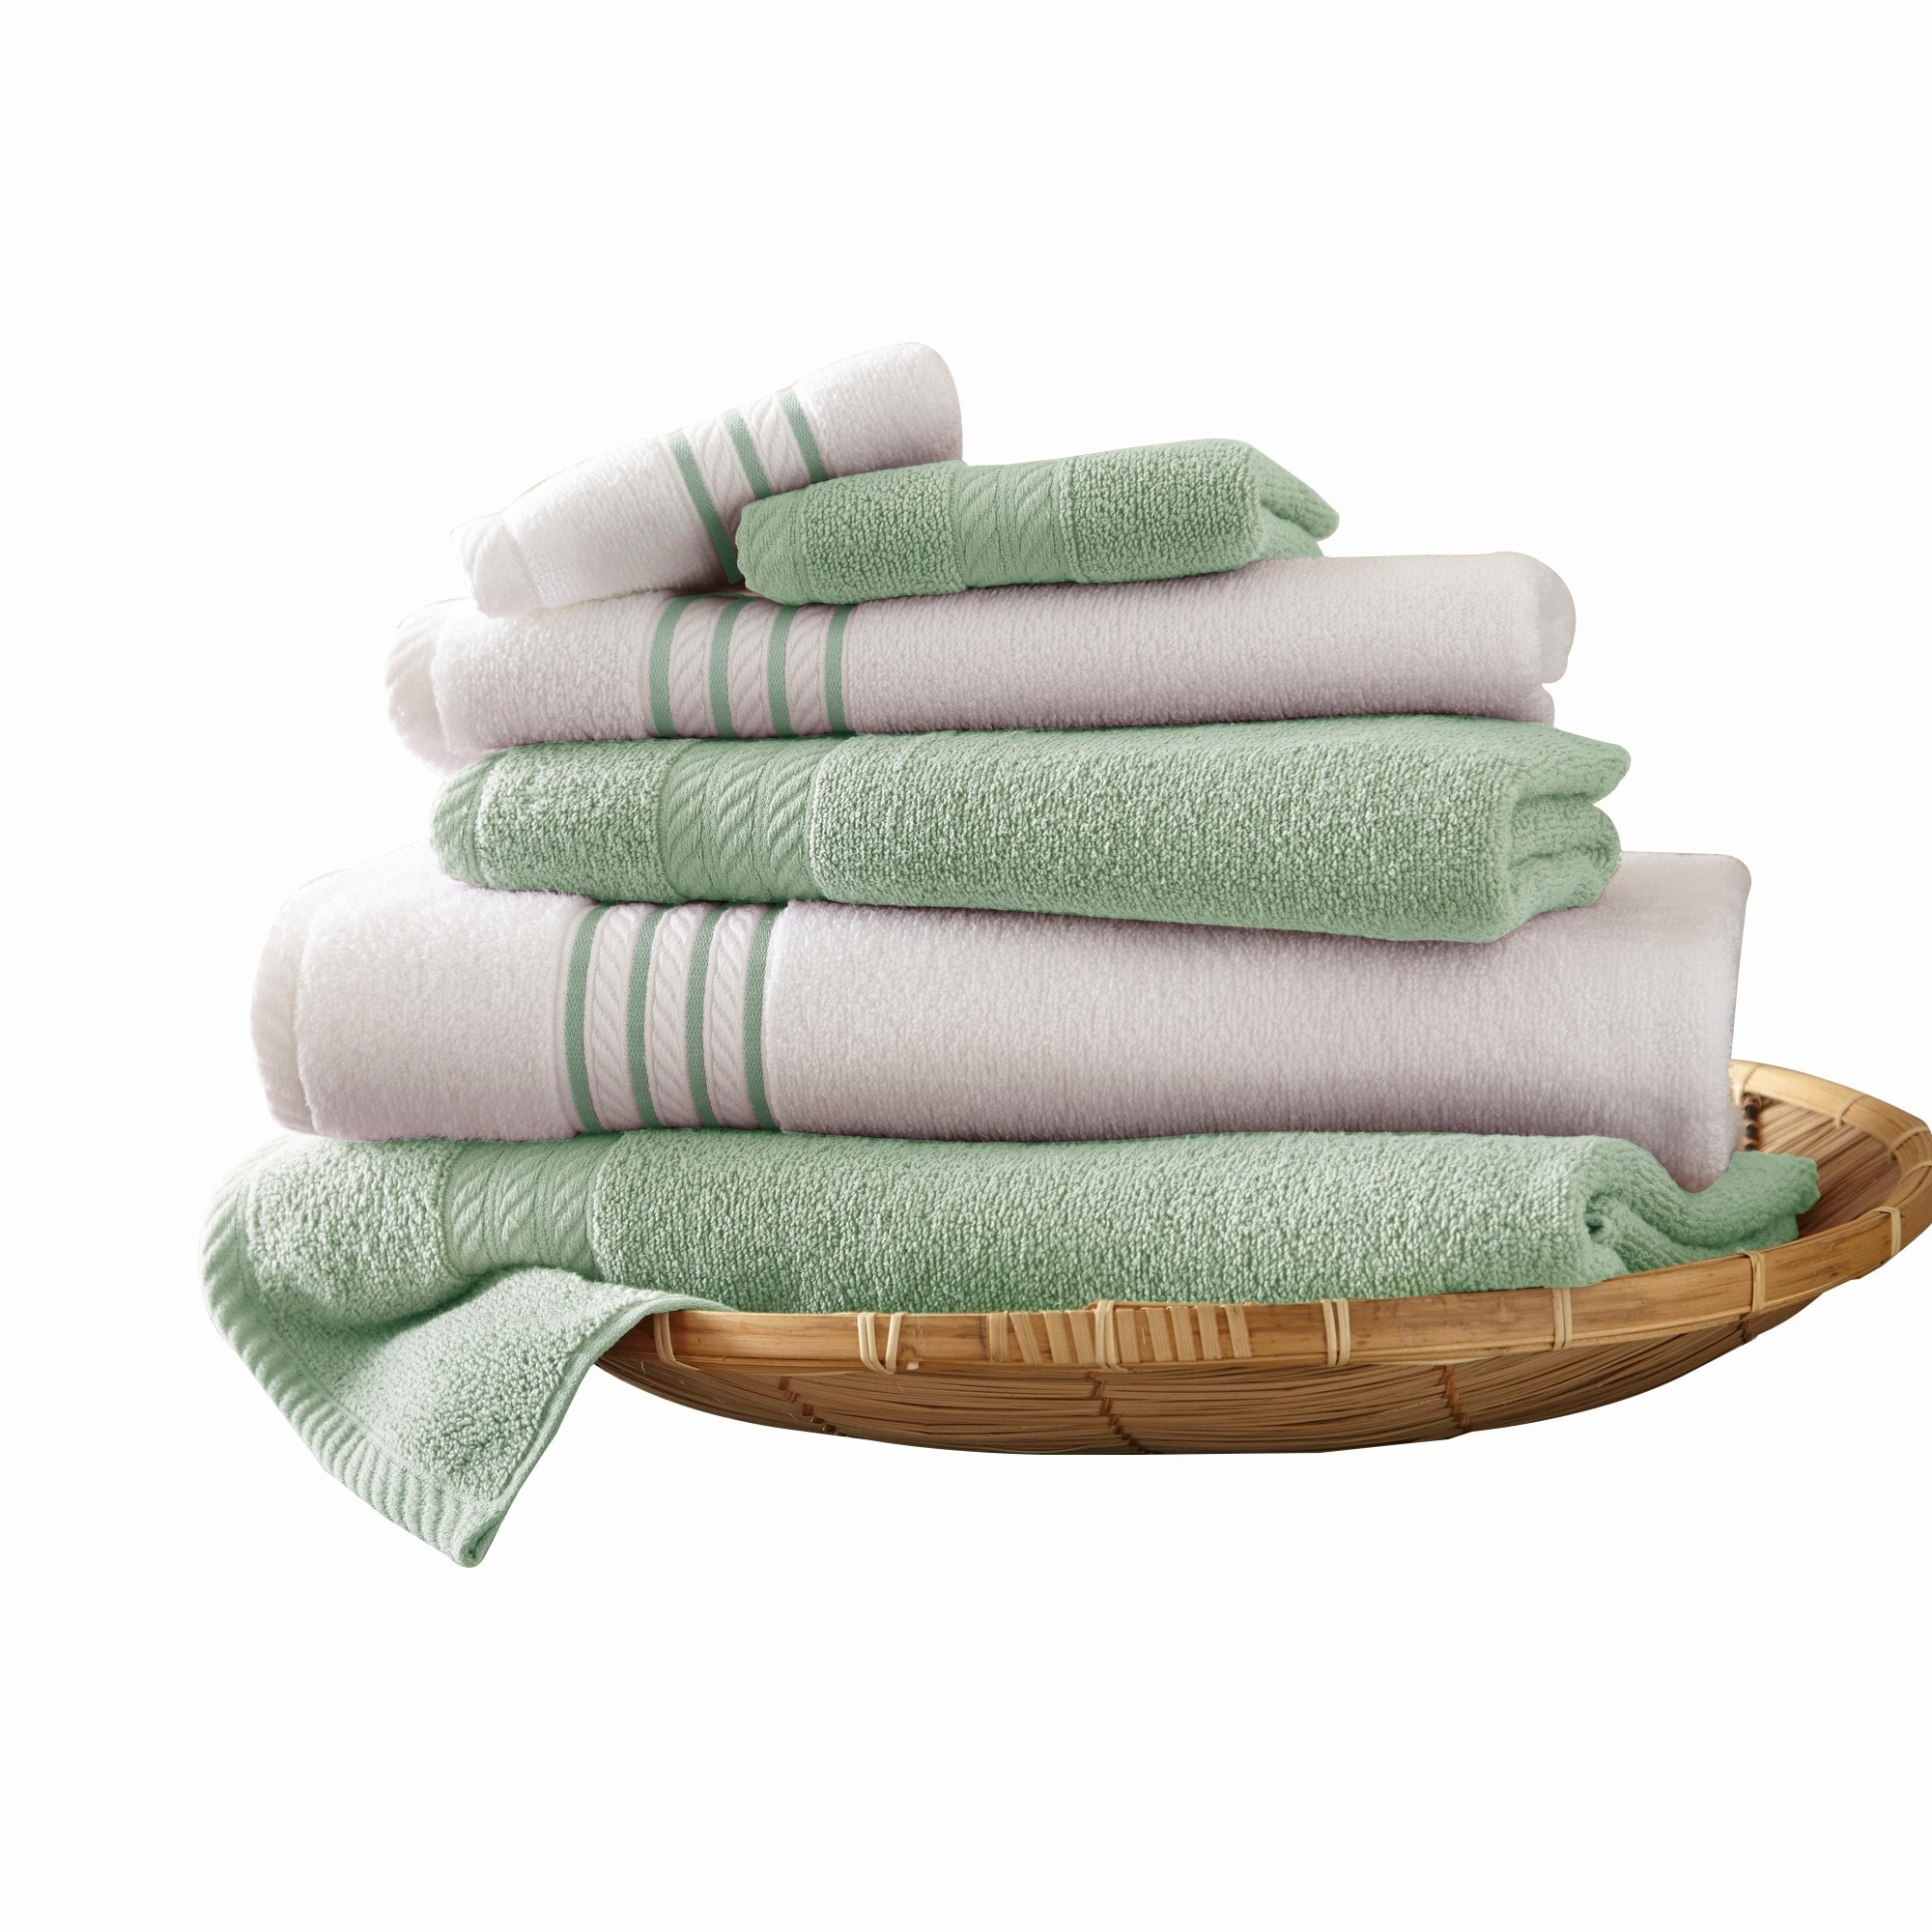 https://ak1.ostkcdn.com/images/products/is/images/direct/693fe28c83ff589048076d8e31af13e30d925562/Dana-6-Piece-Soft-Egyptian-Cotton-Towel-Set%2C-Striped%2C-Sage-Green%2C-White.jpg